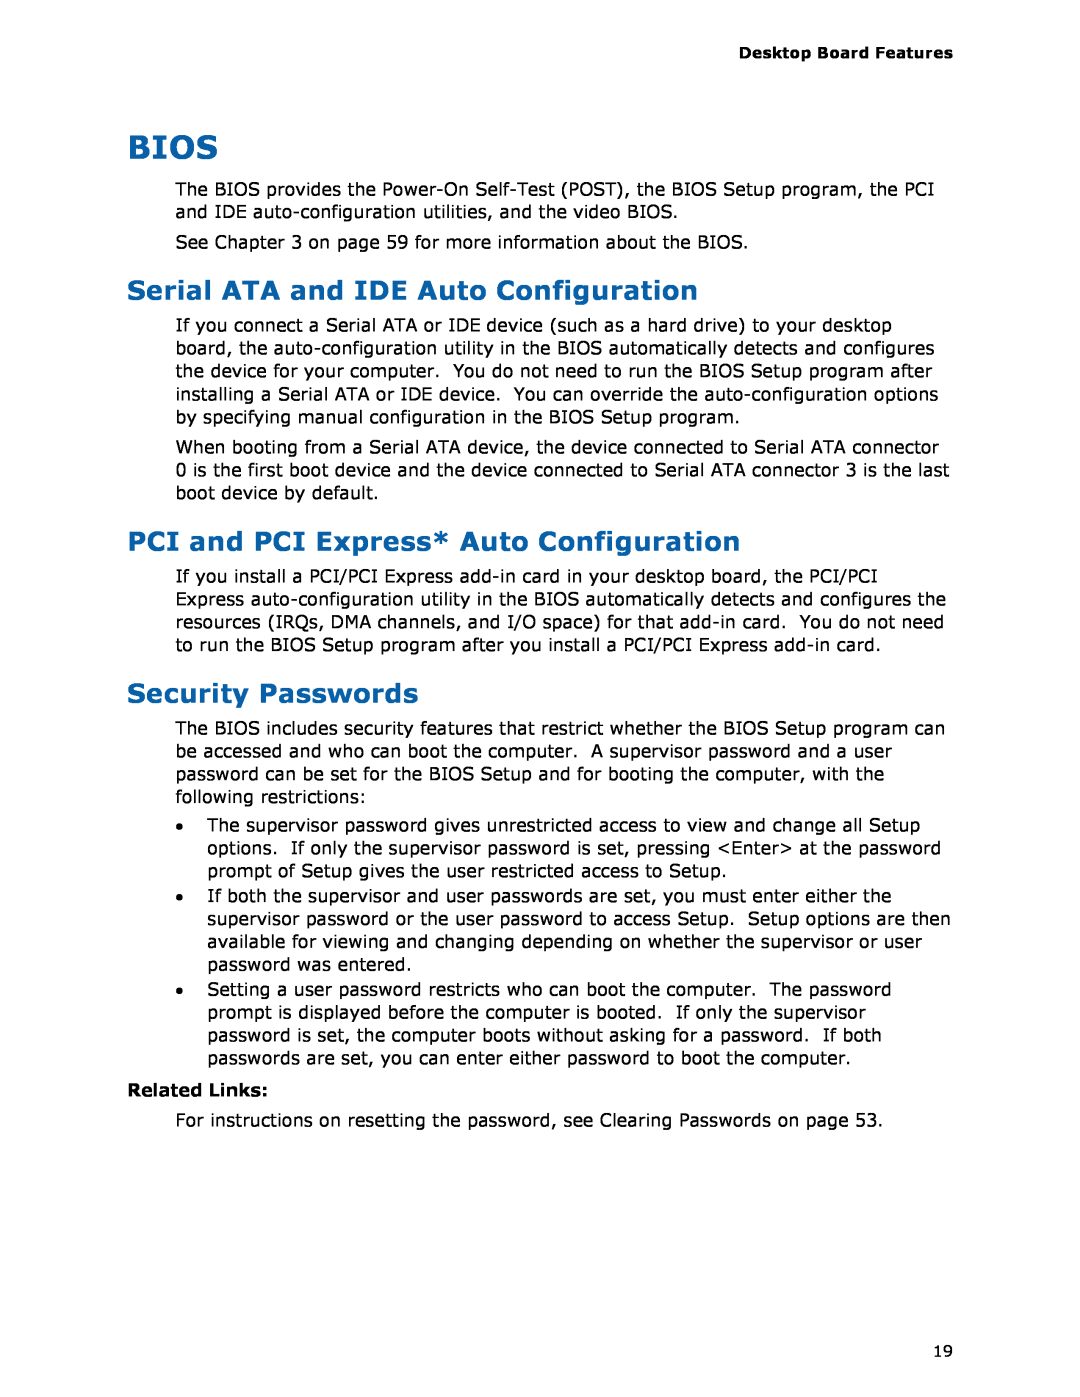 Intel D975XBX2 Bios, Serial ATA and IDE Auto Configuration, PCI and PCI Express* Auto Configuration, Security Passwords 